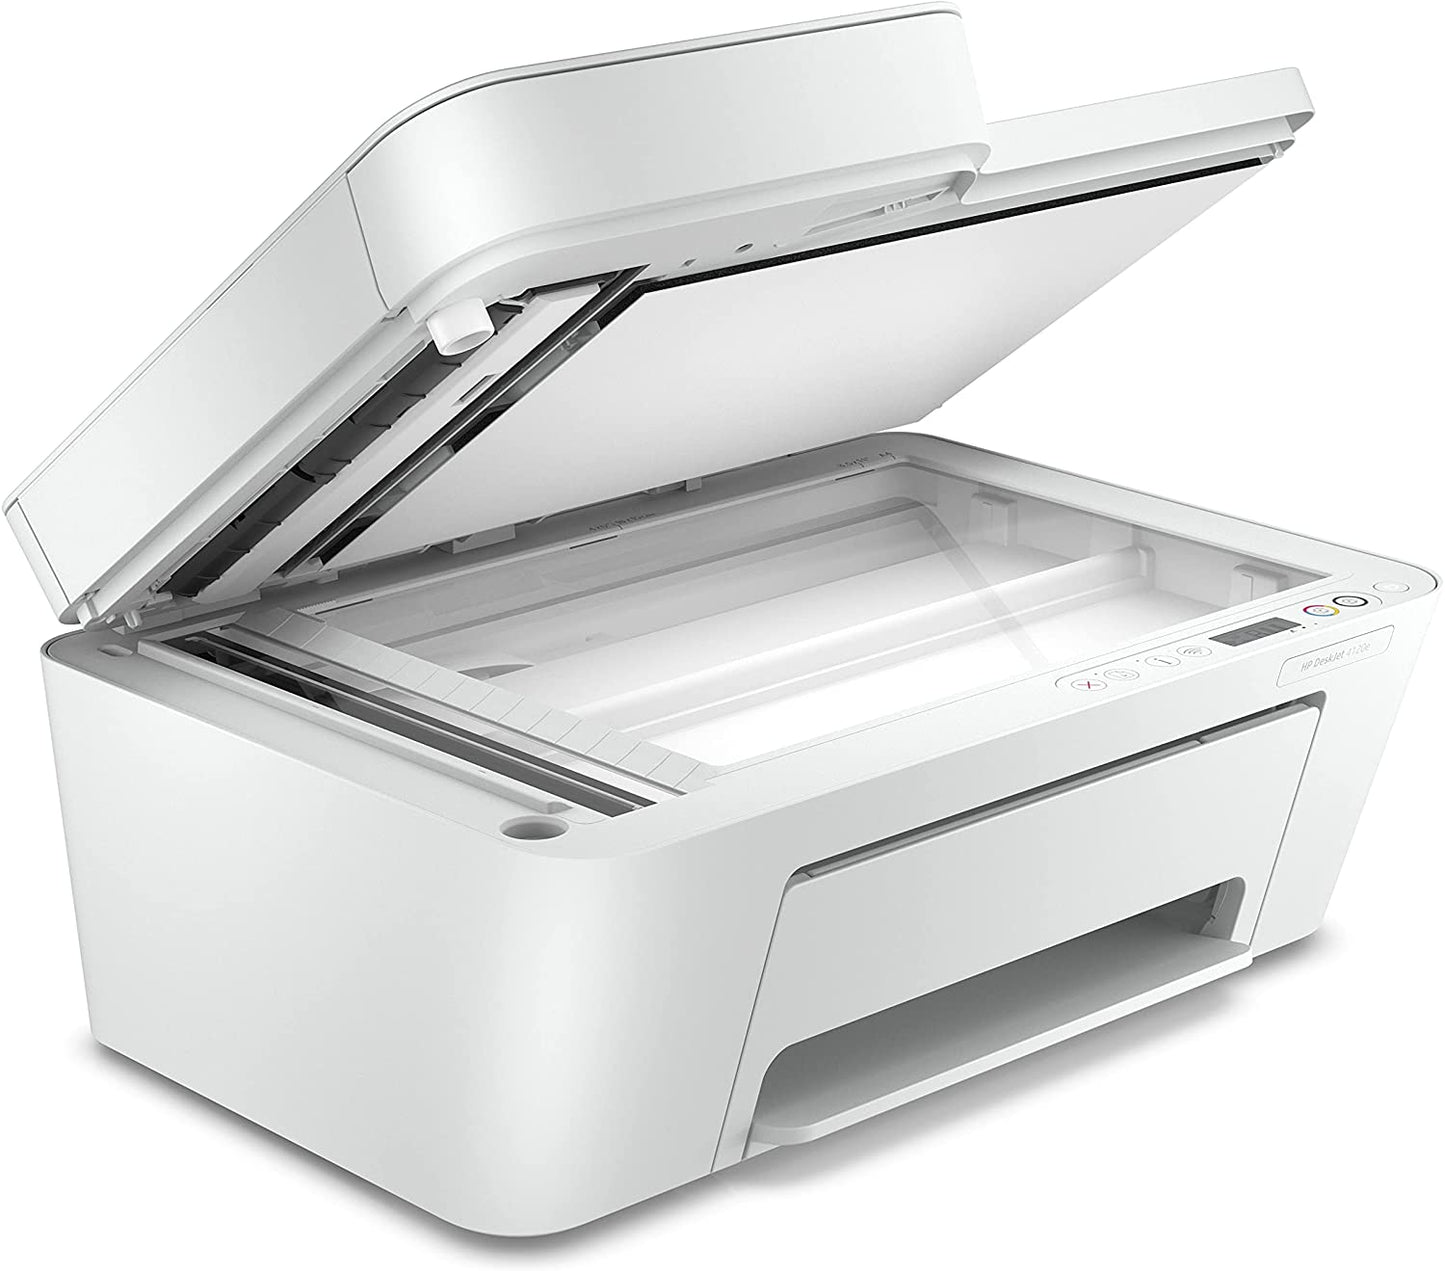 HP Deskjet 4000 Series All-In-One Printer